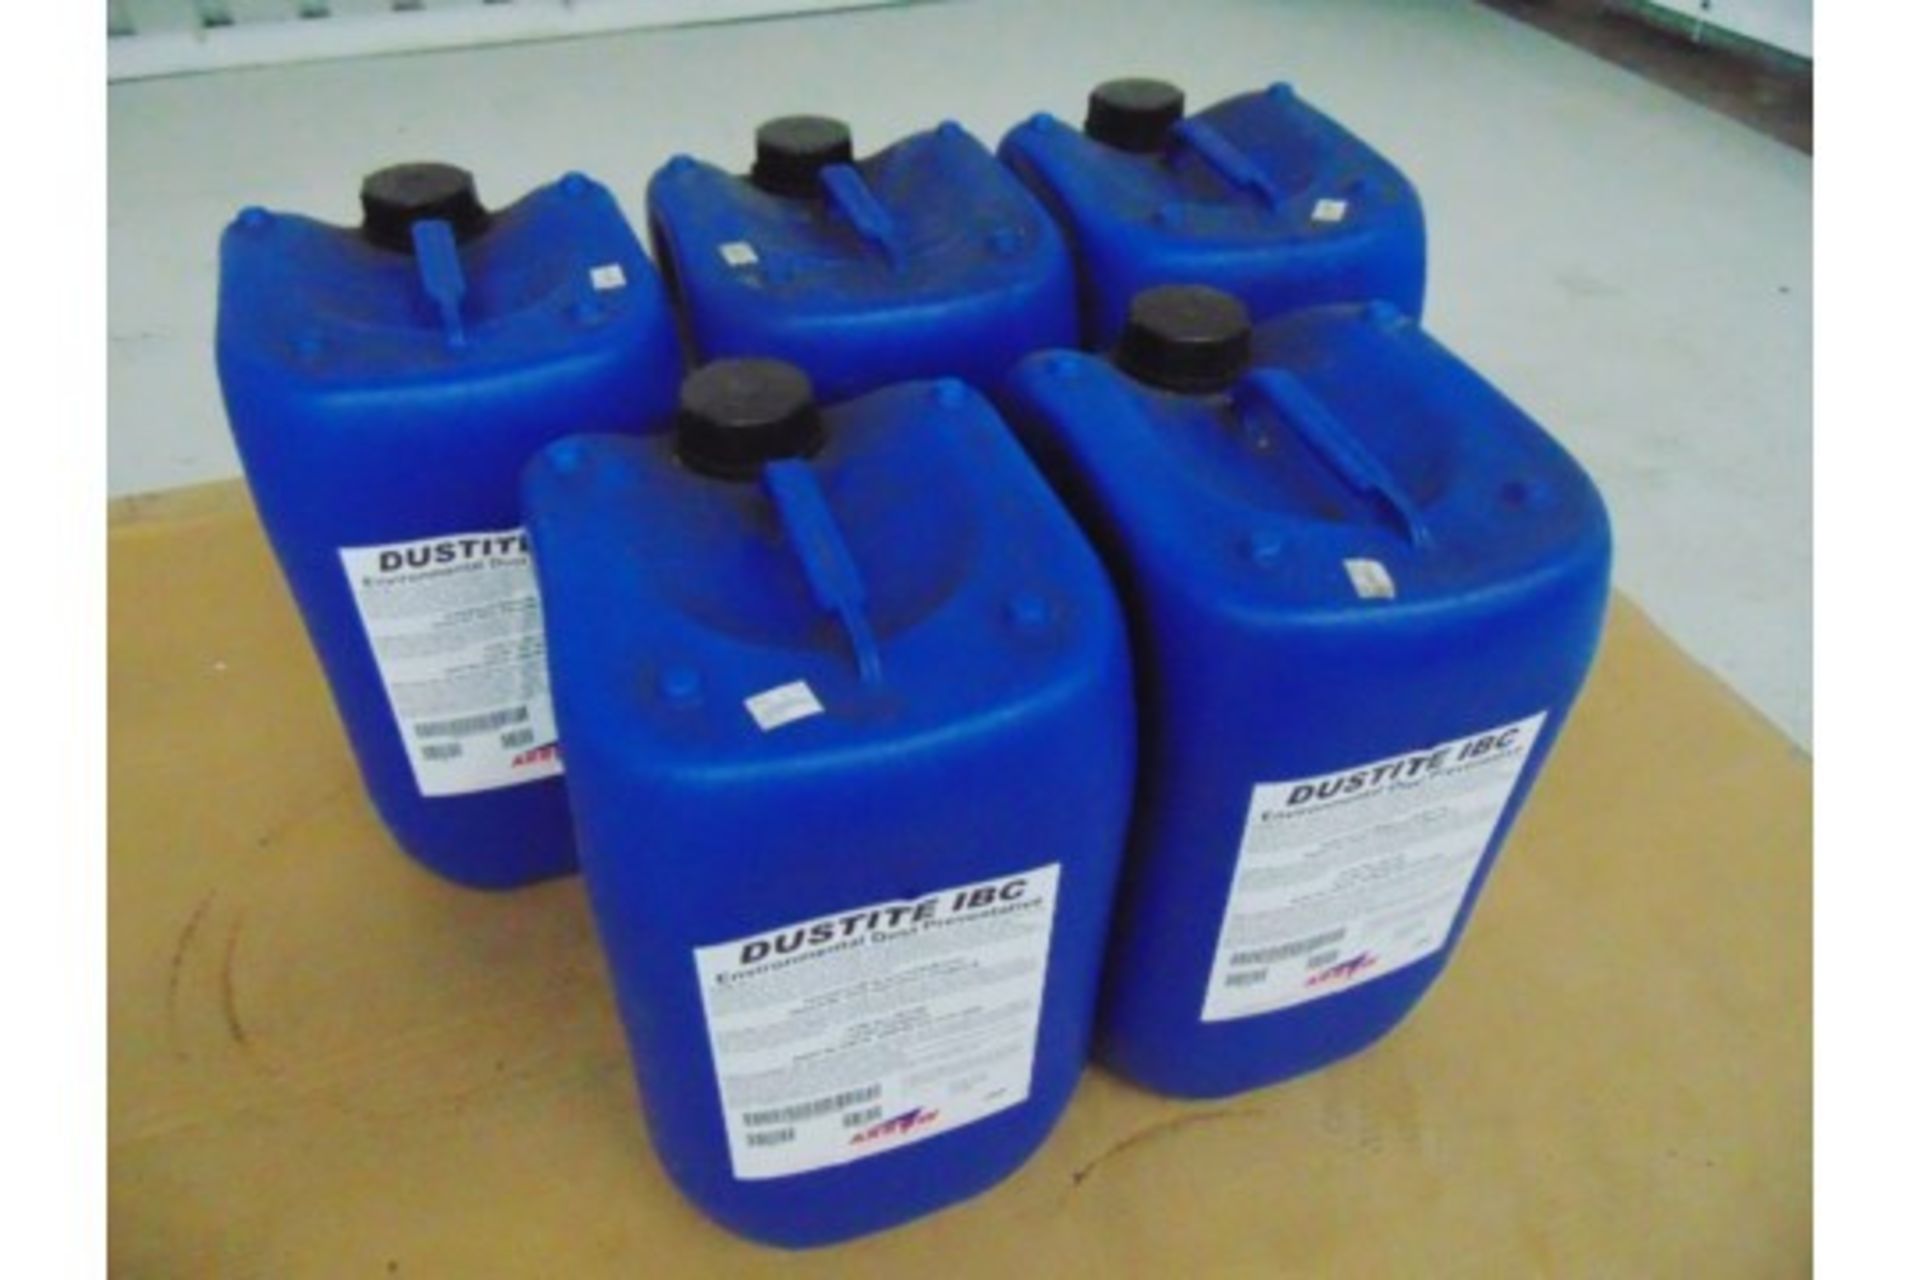 5 x Unissued 20L Tubs of Dustite IBC Environmental Dust Preventative